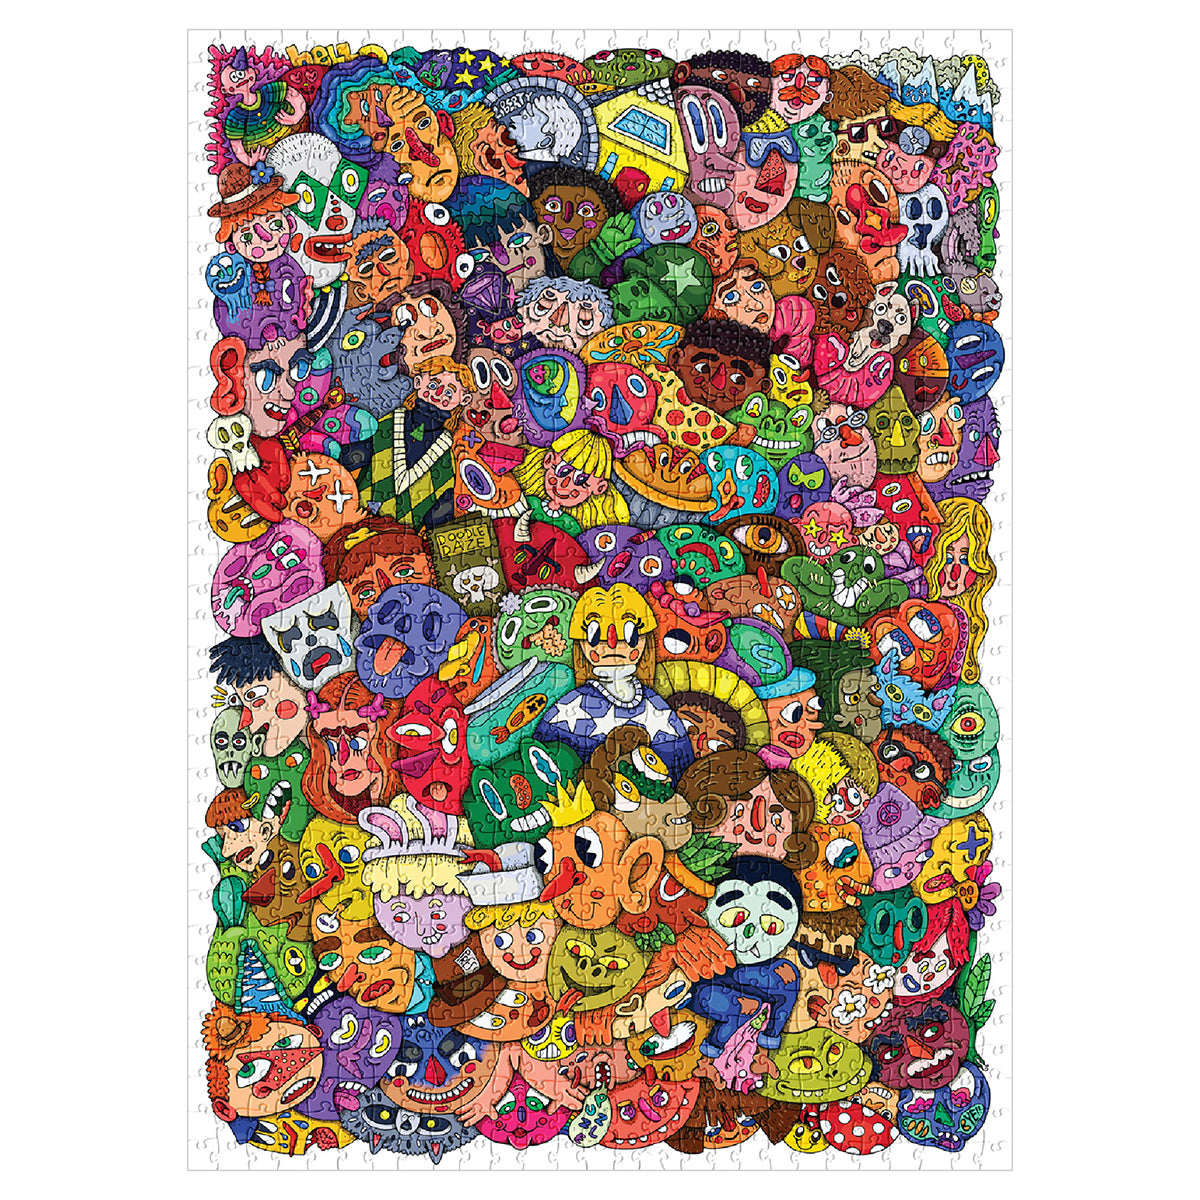 SOONNESS critter bundle cartoon illustration 1000 piece puzzle doodle hayley patterson halloween